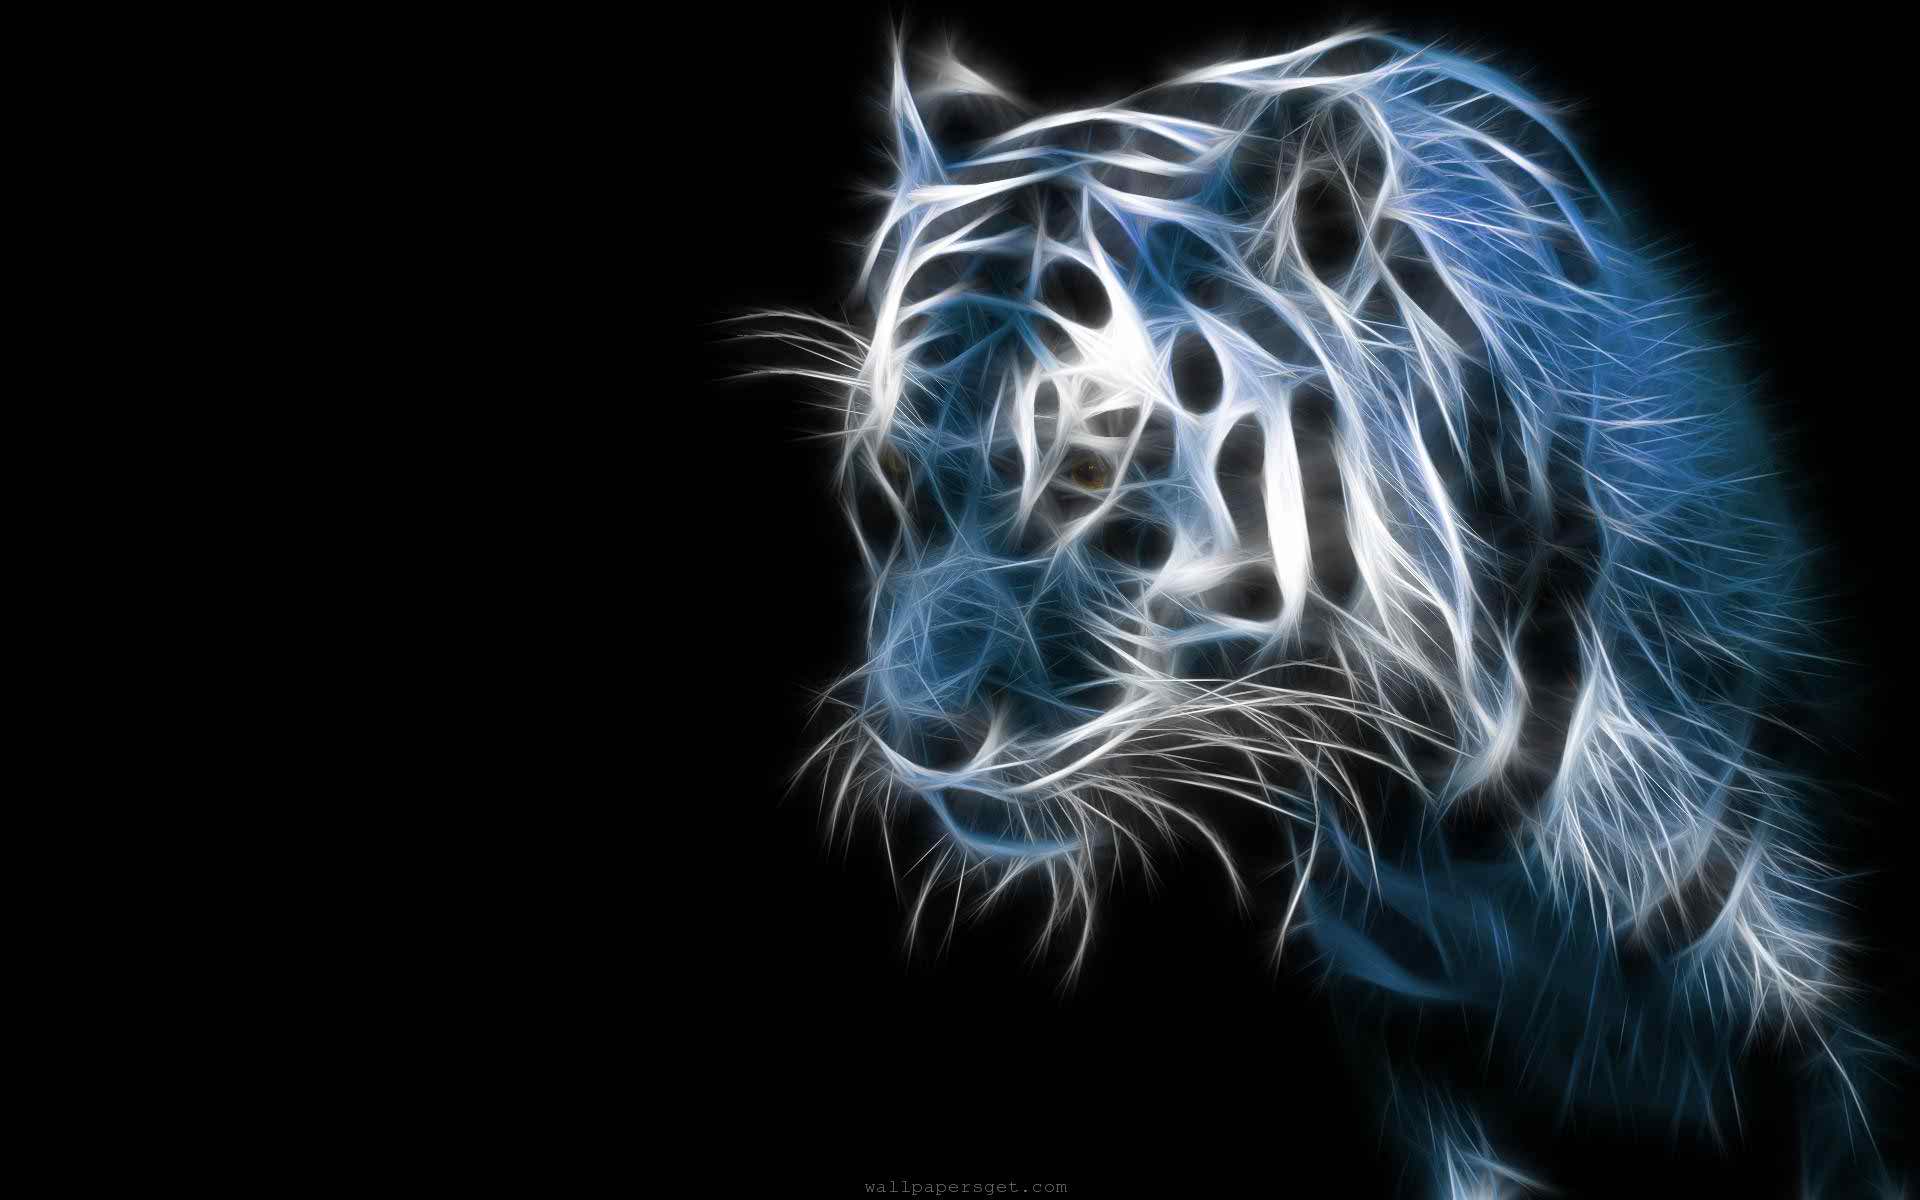 Tiger Cool Image